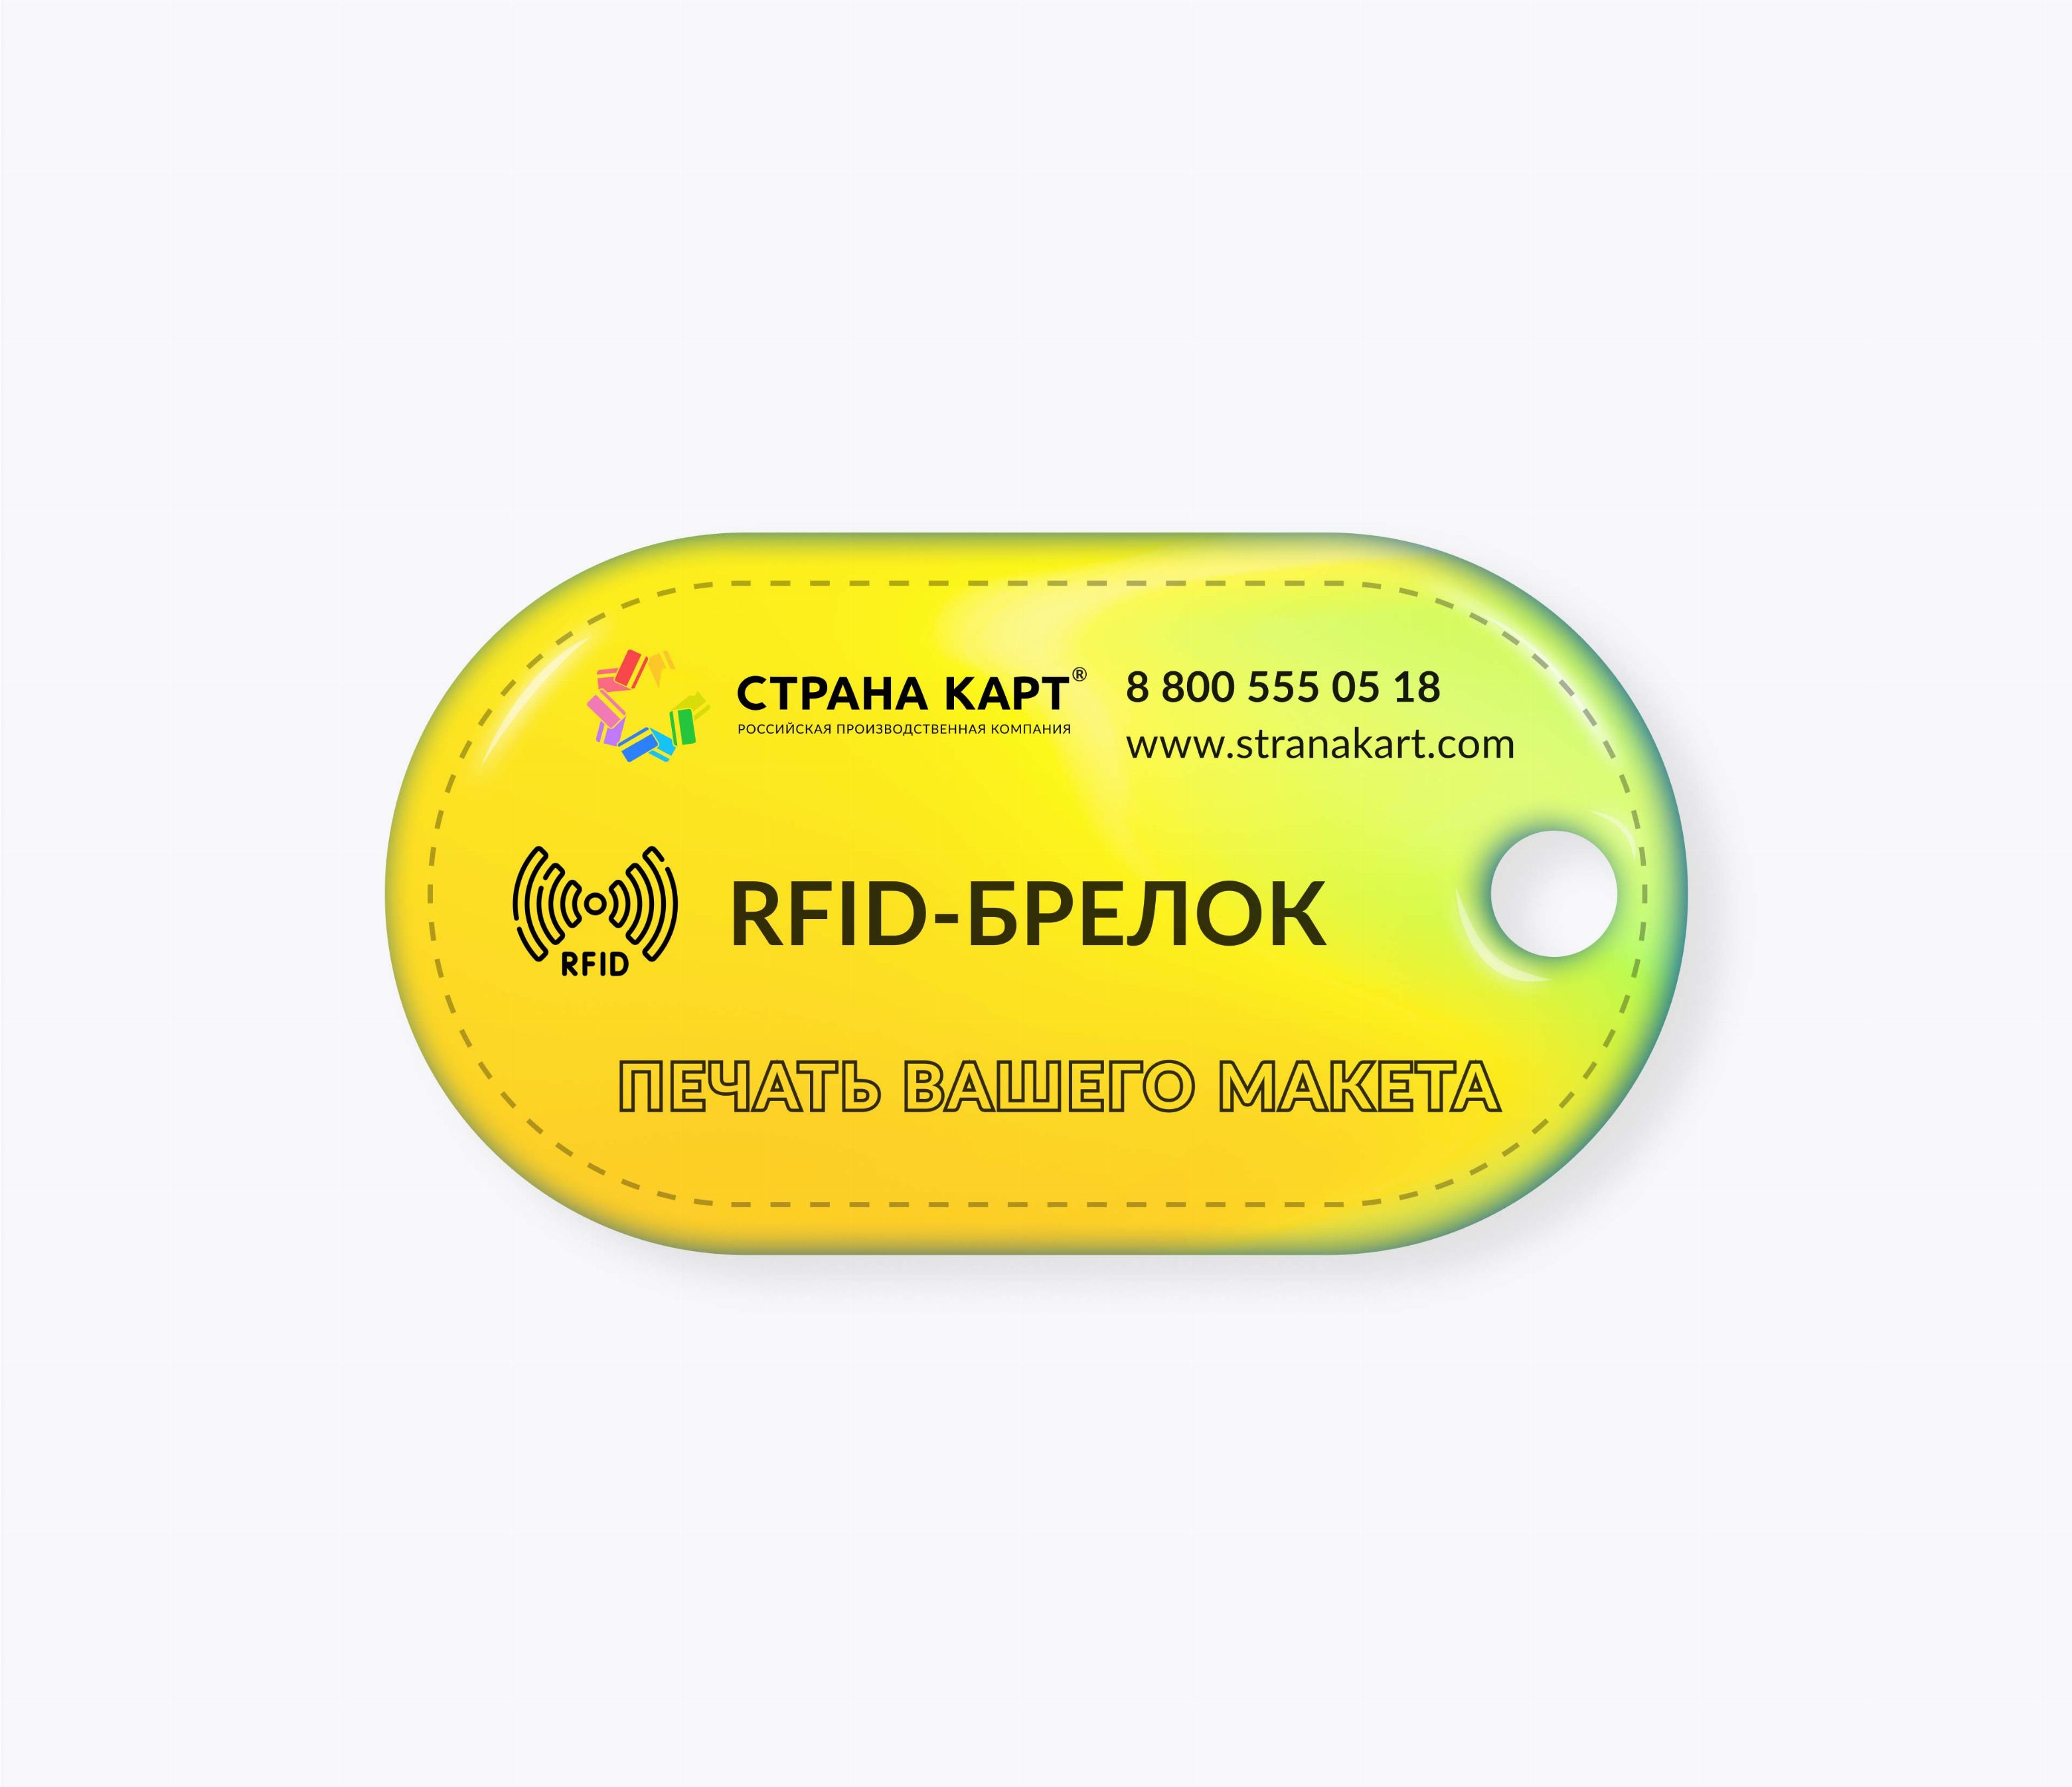 Овальные RFID-брелоки NEOKEY® с чипом NXP MIFARE Plus S 2k 7 byte UID RFID-брелоки NEOKEY® с чипом NXP MIFARE Plus S 2k 7 byte UID и вашим логотипом